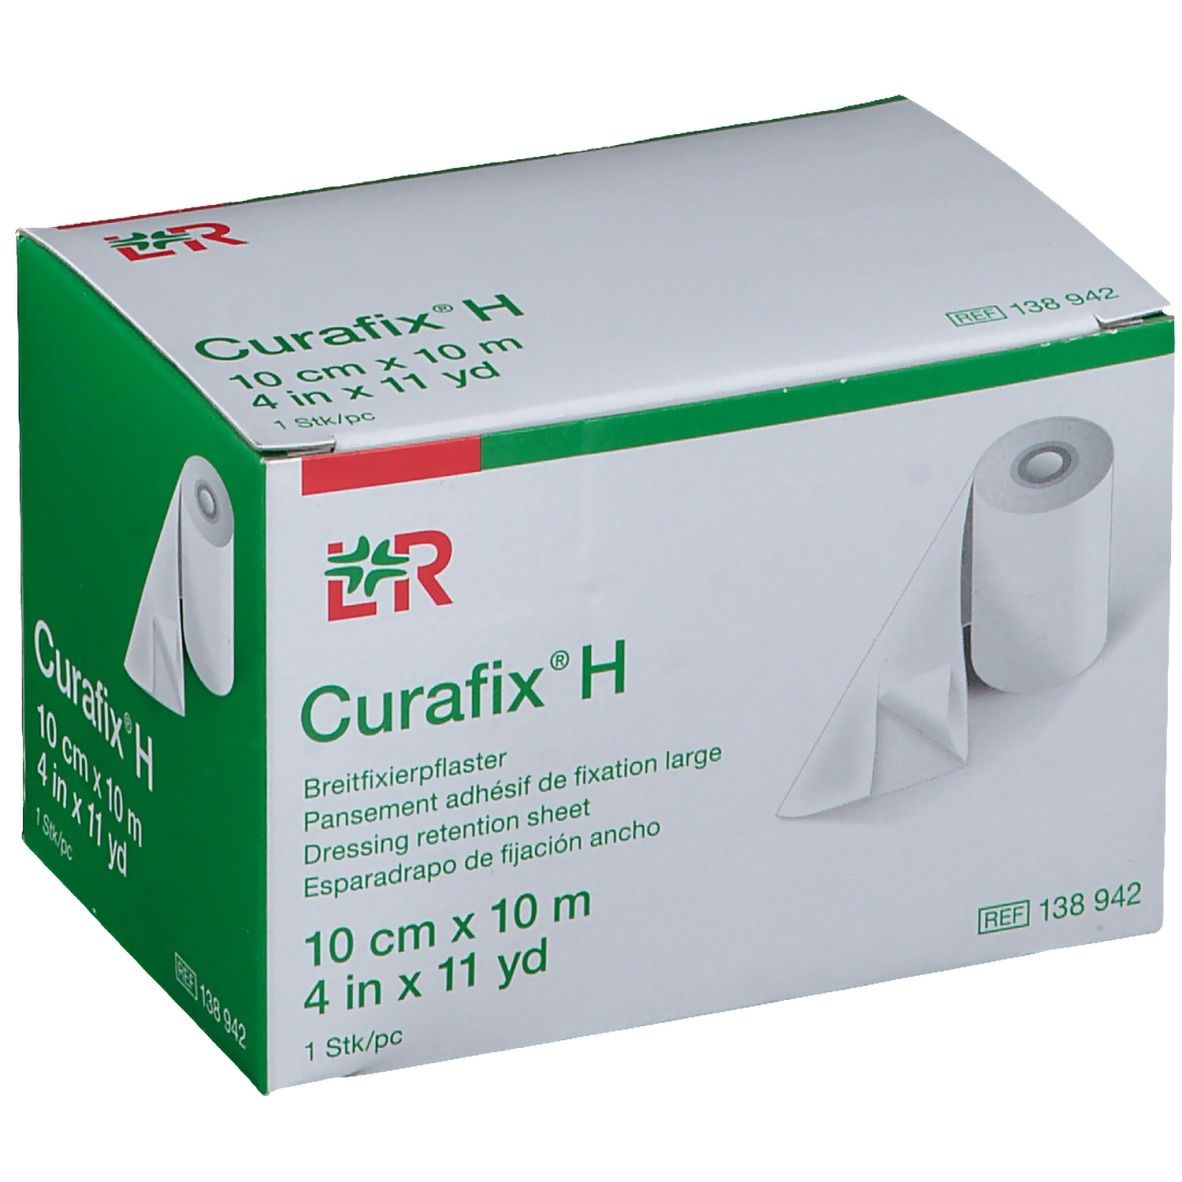 Curafix® H 10 cm x 10 m